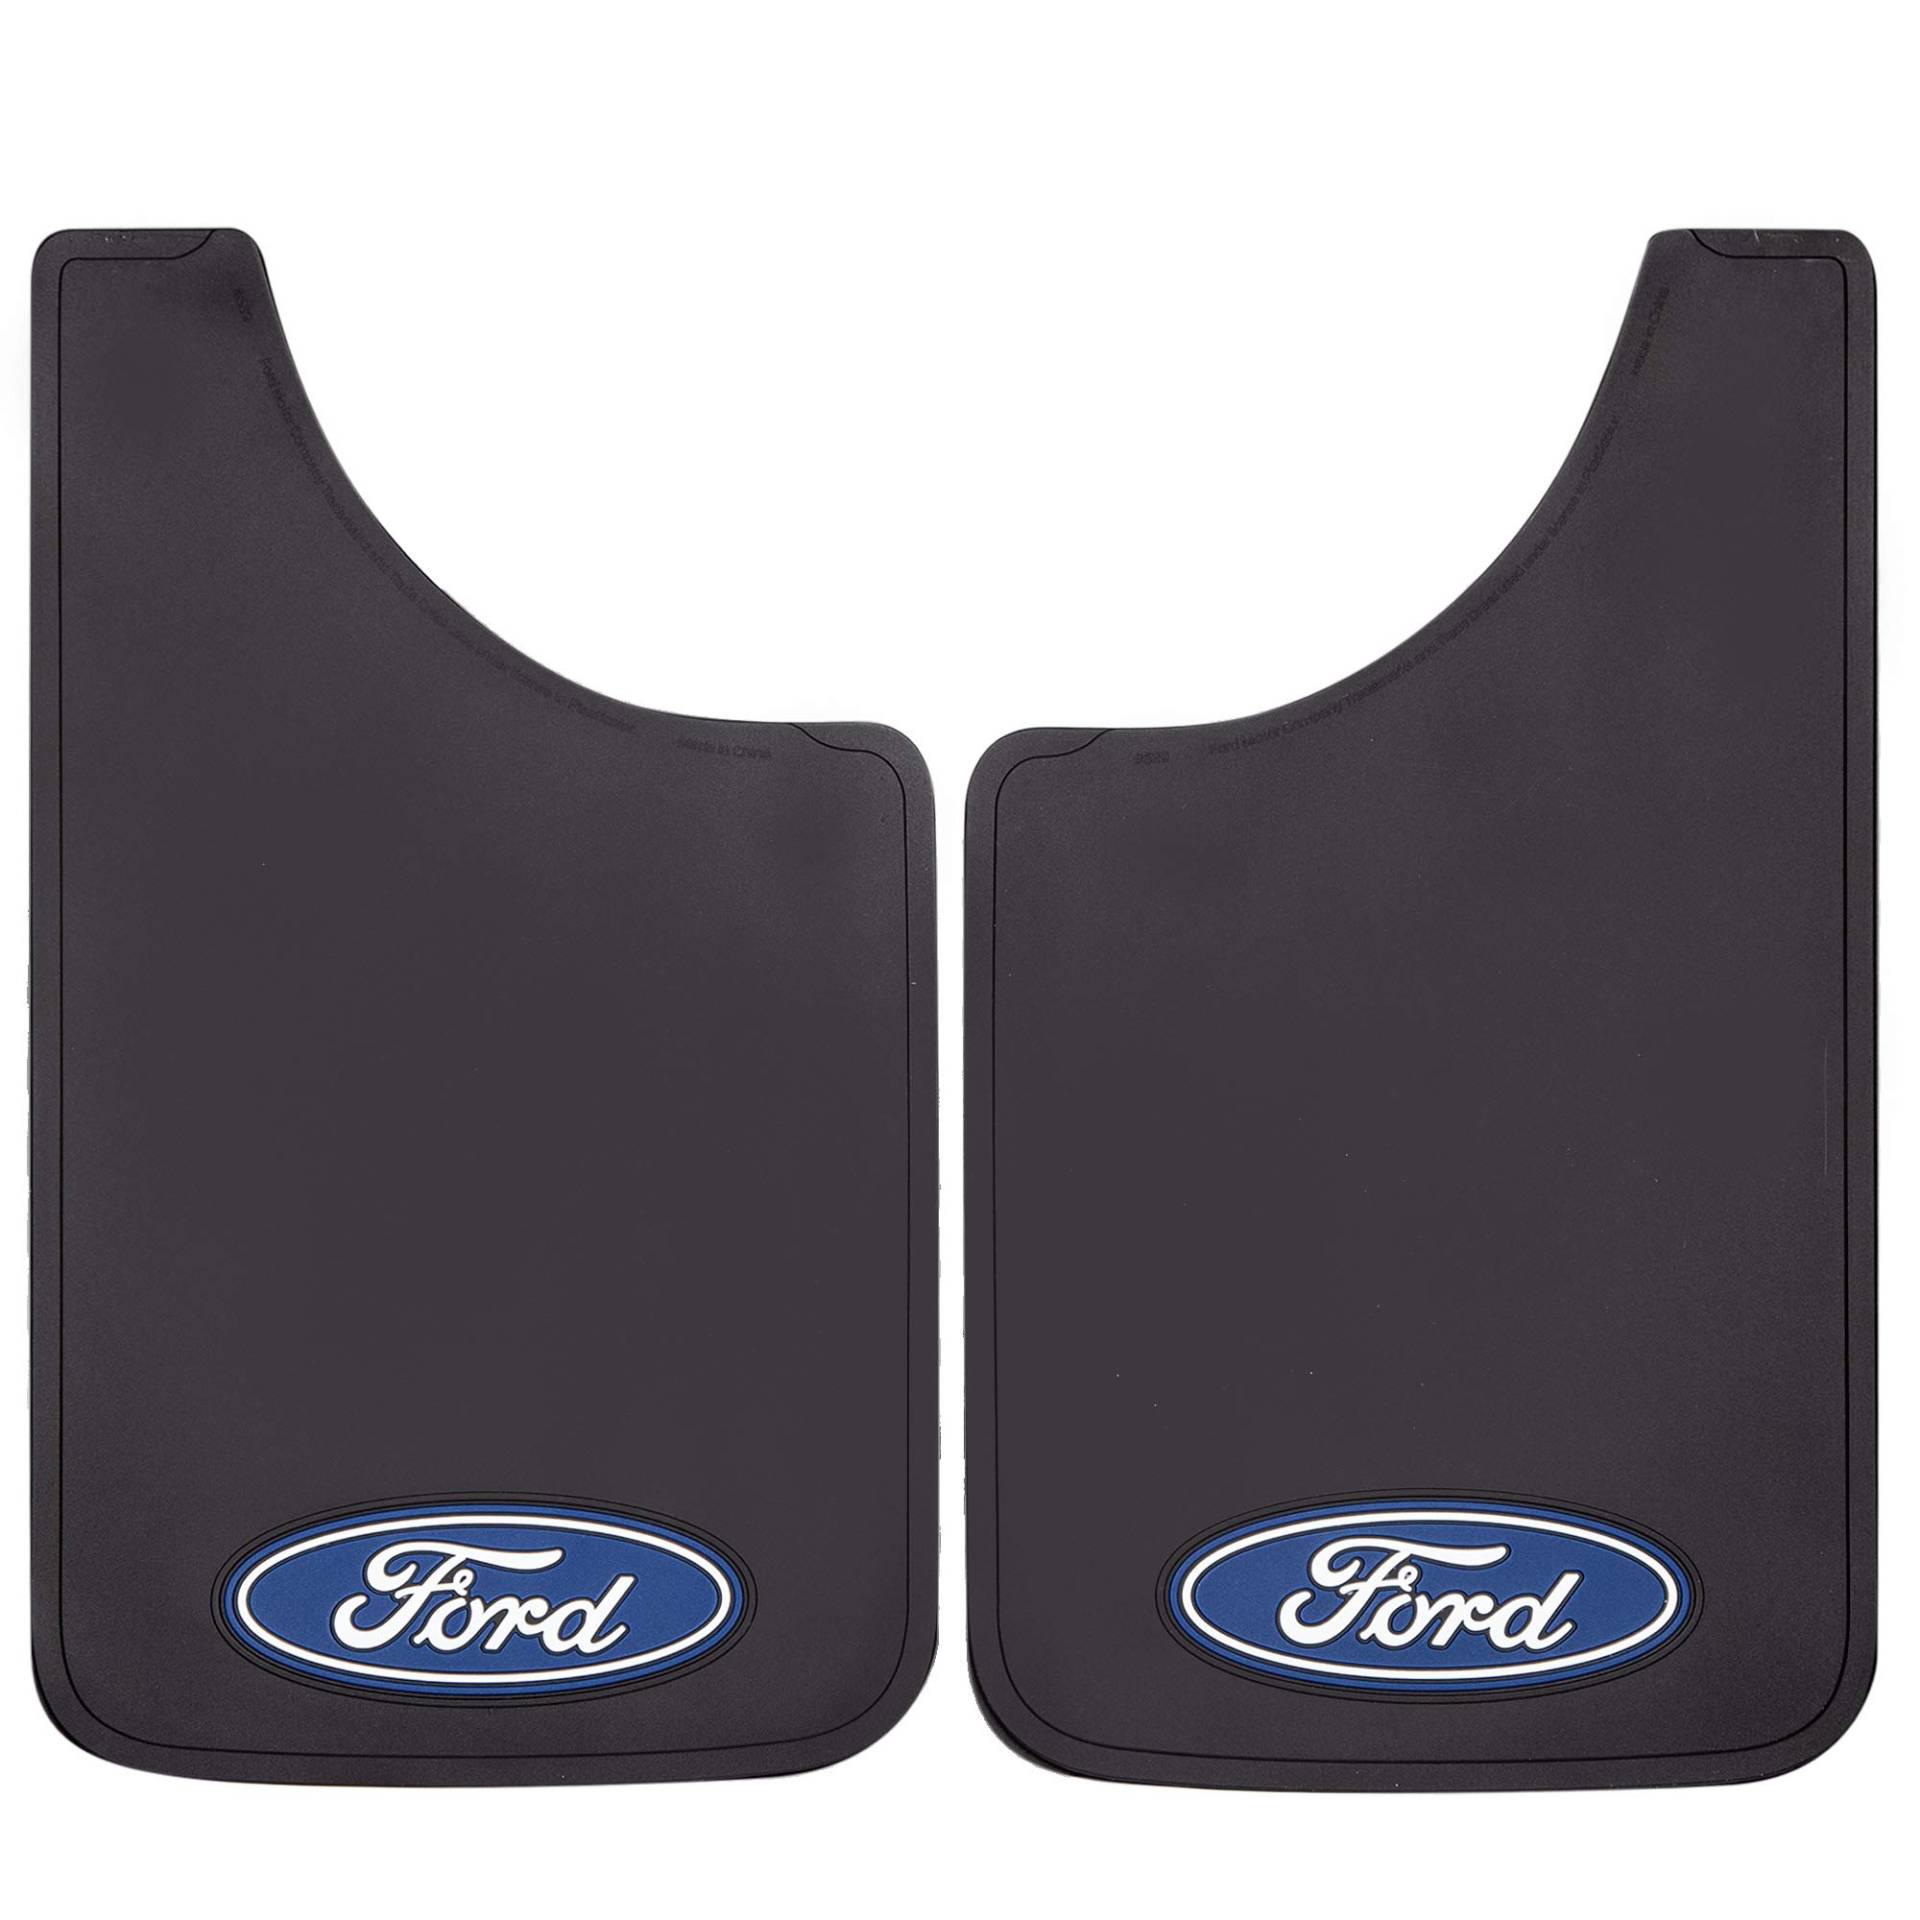 Plasticolor 000539R01 Ford Oval Logo Easy Fit Kotflügel 27,9 x 48,3 cm – 2 Stück, schwarz von Plasticolor